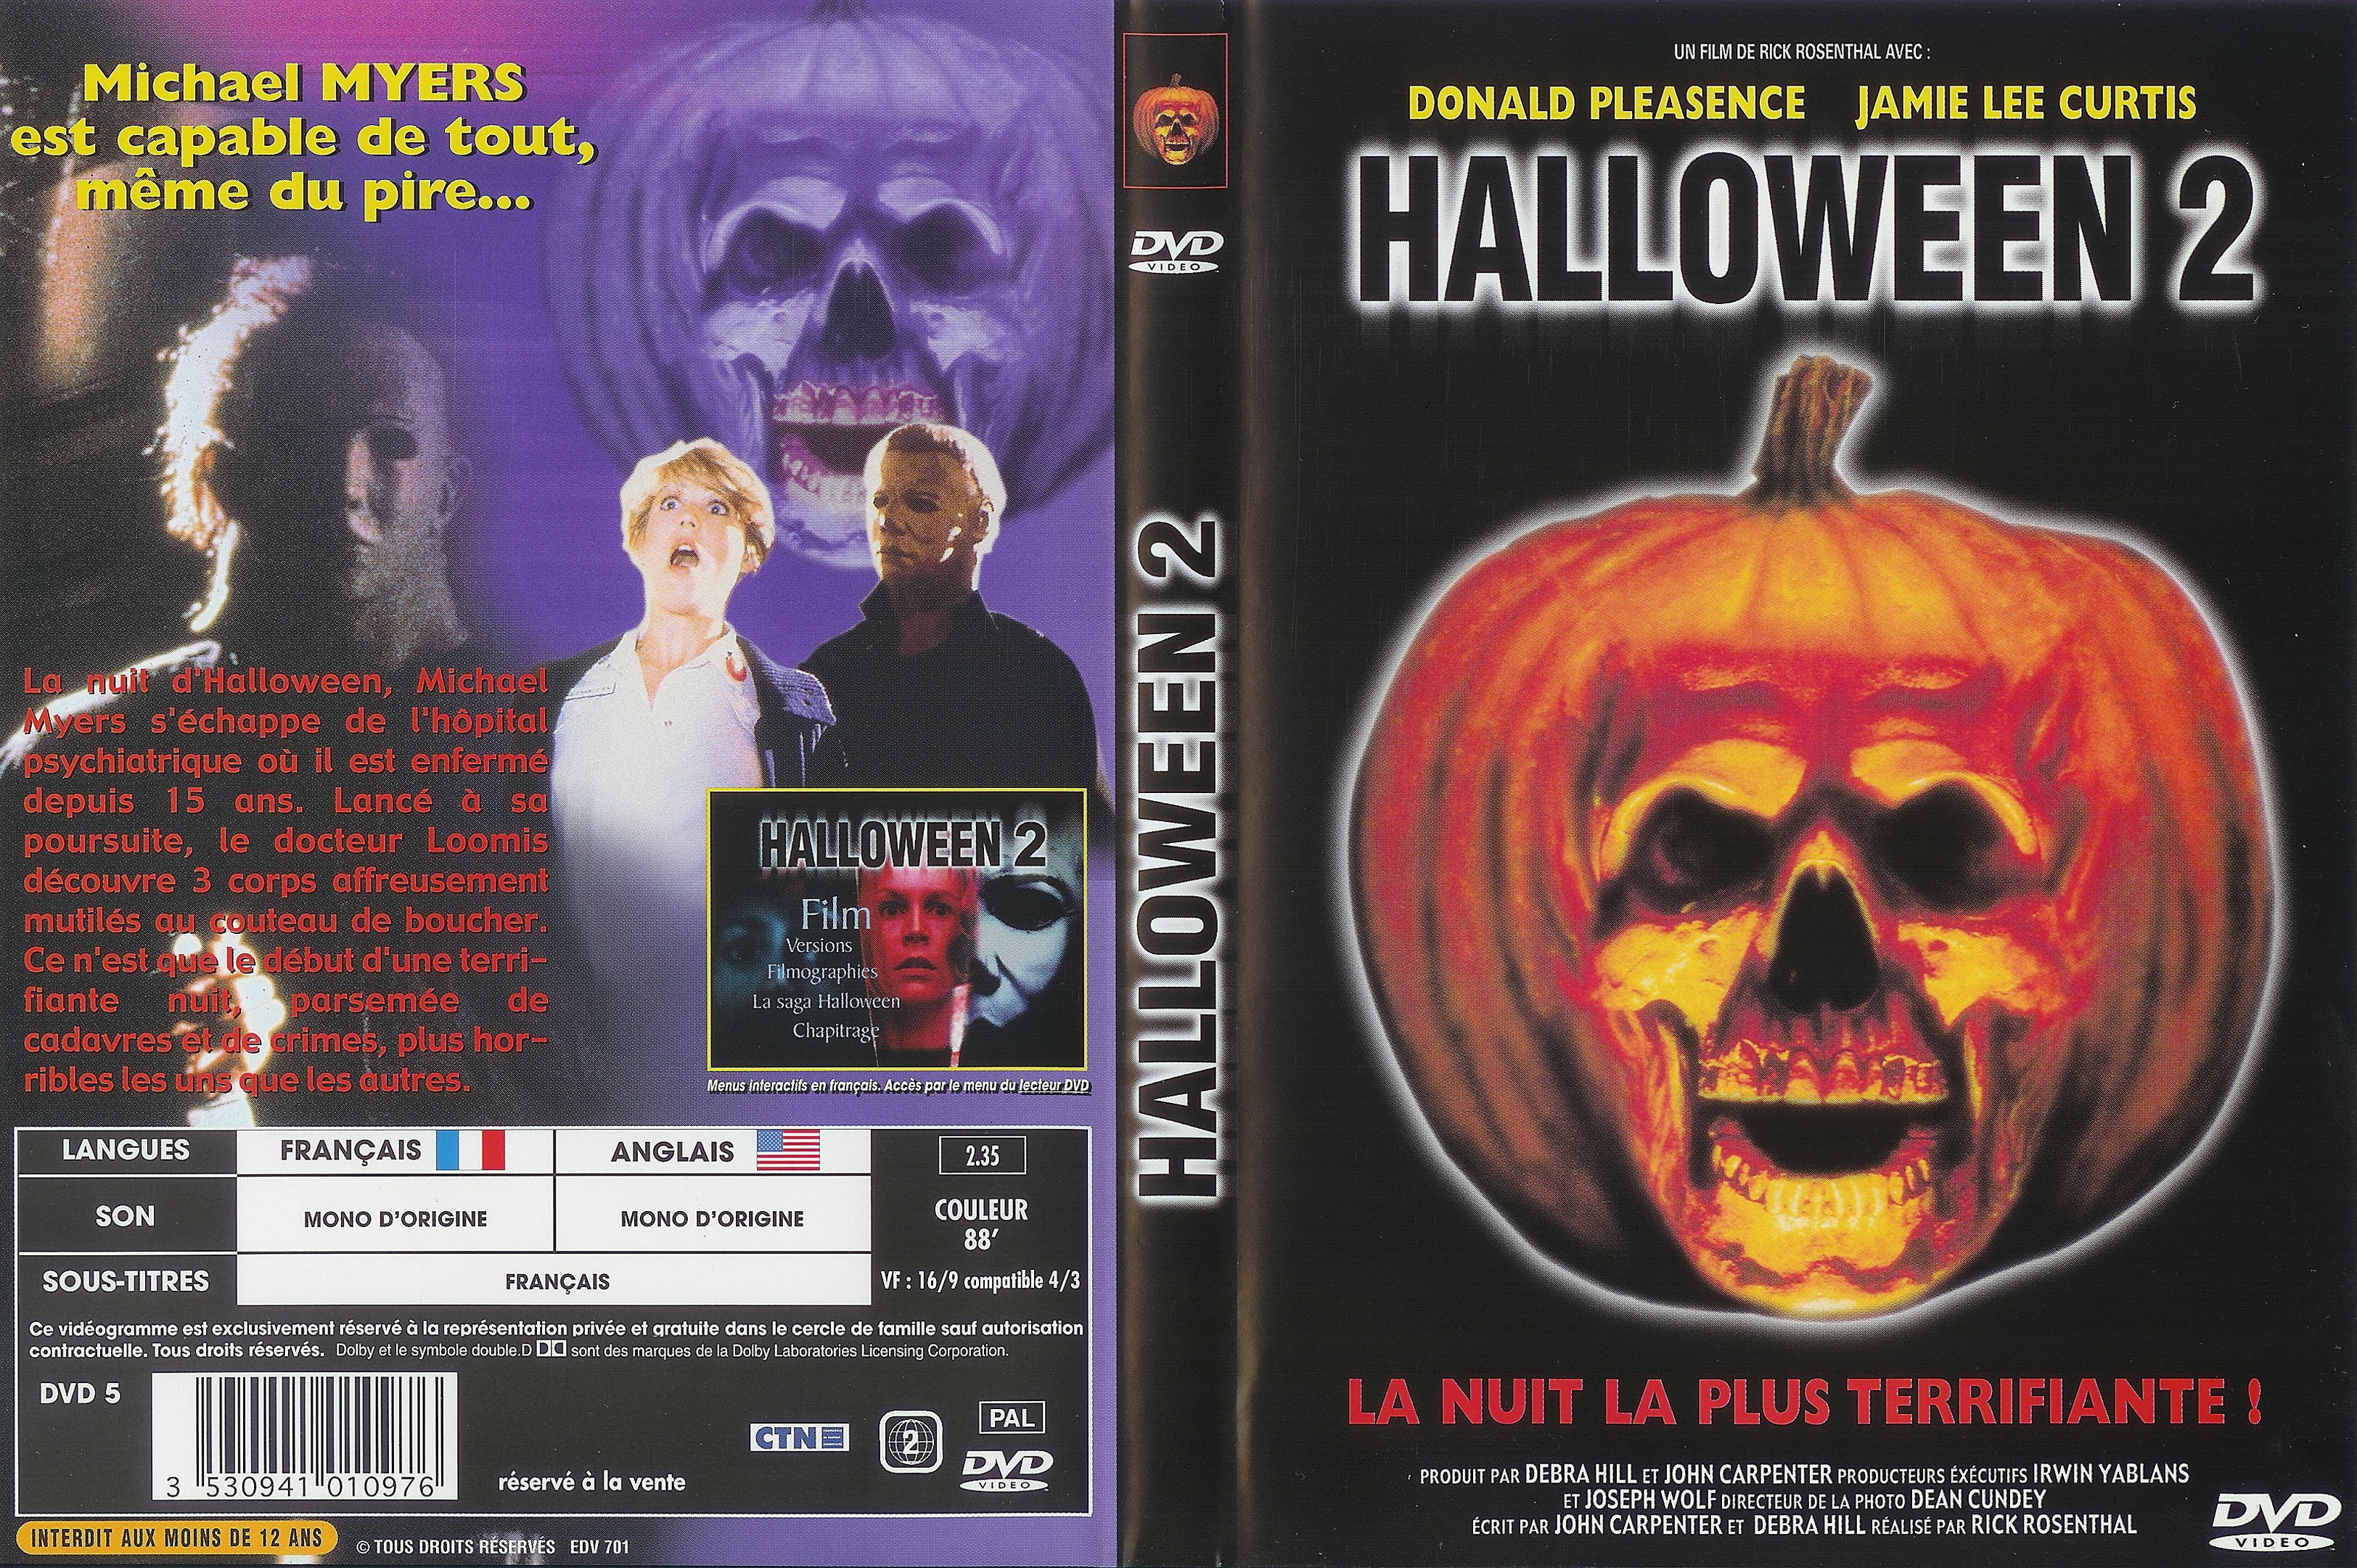 Jaquette DVD Halloween 2 v2